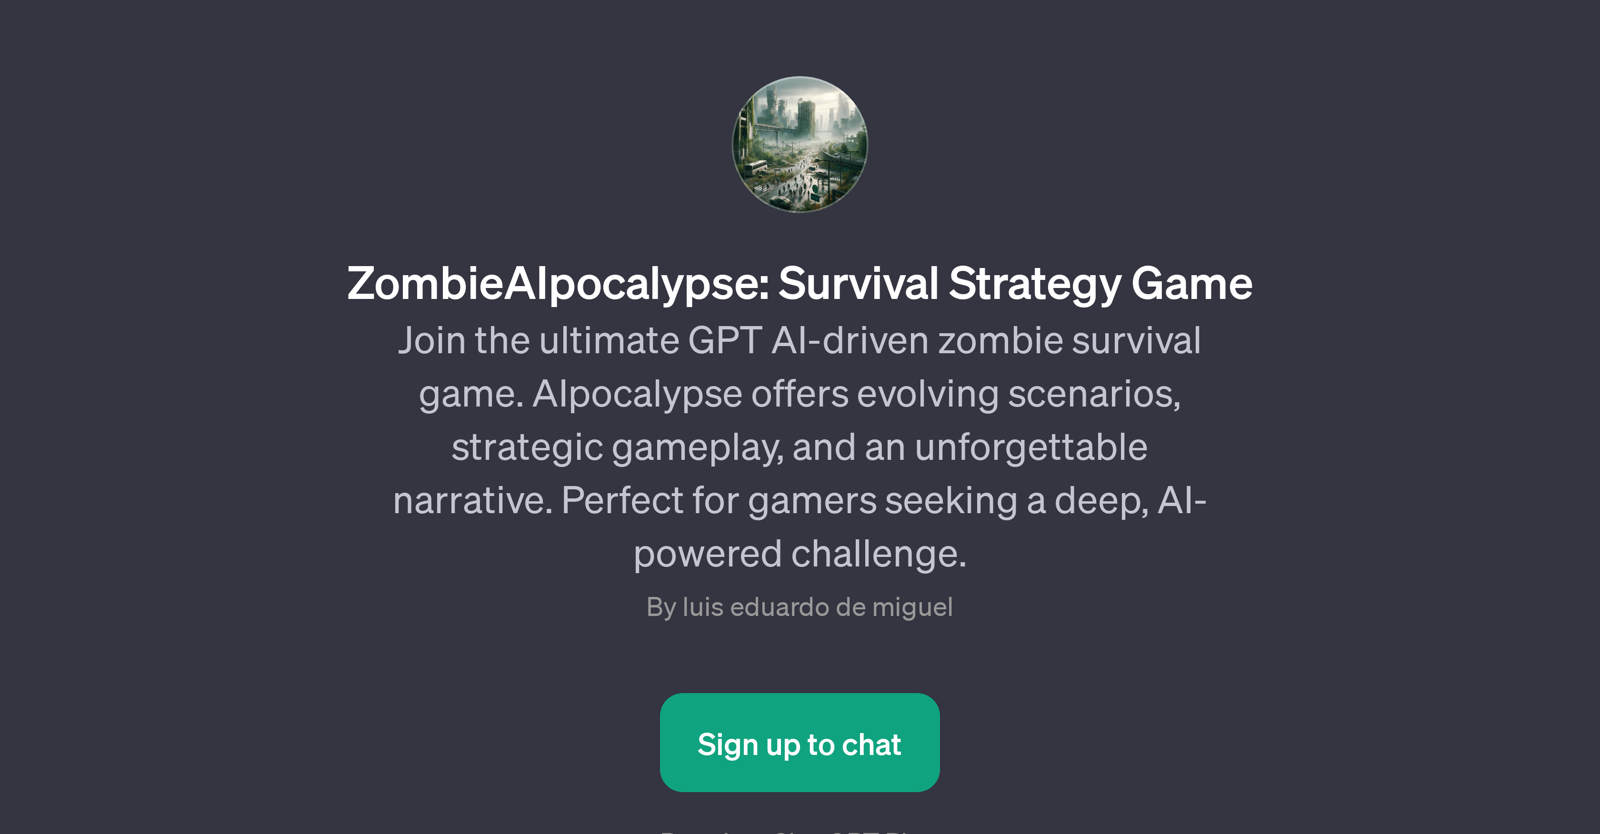 ZombieAIpocalypse: Survival Strategy Game website